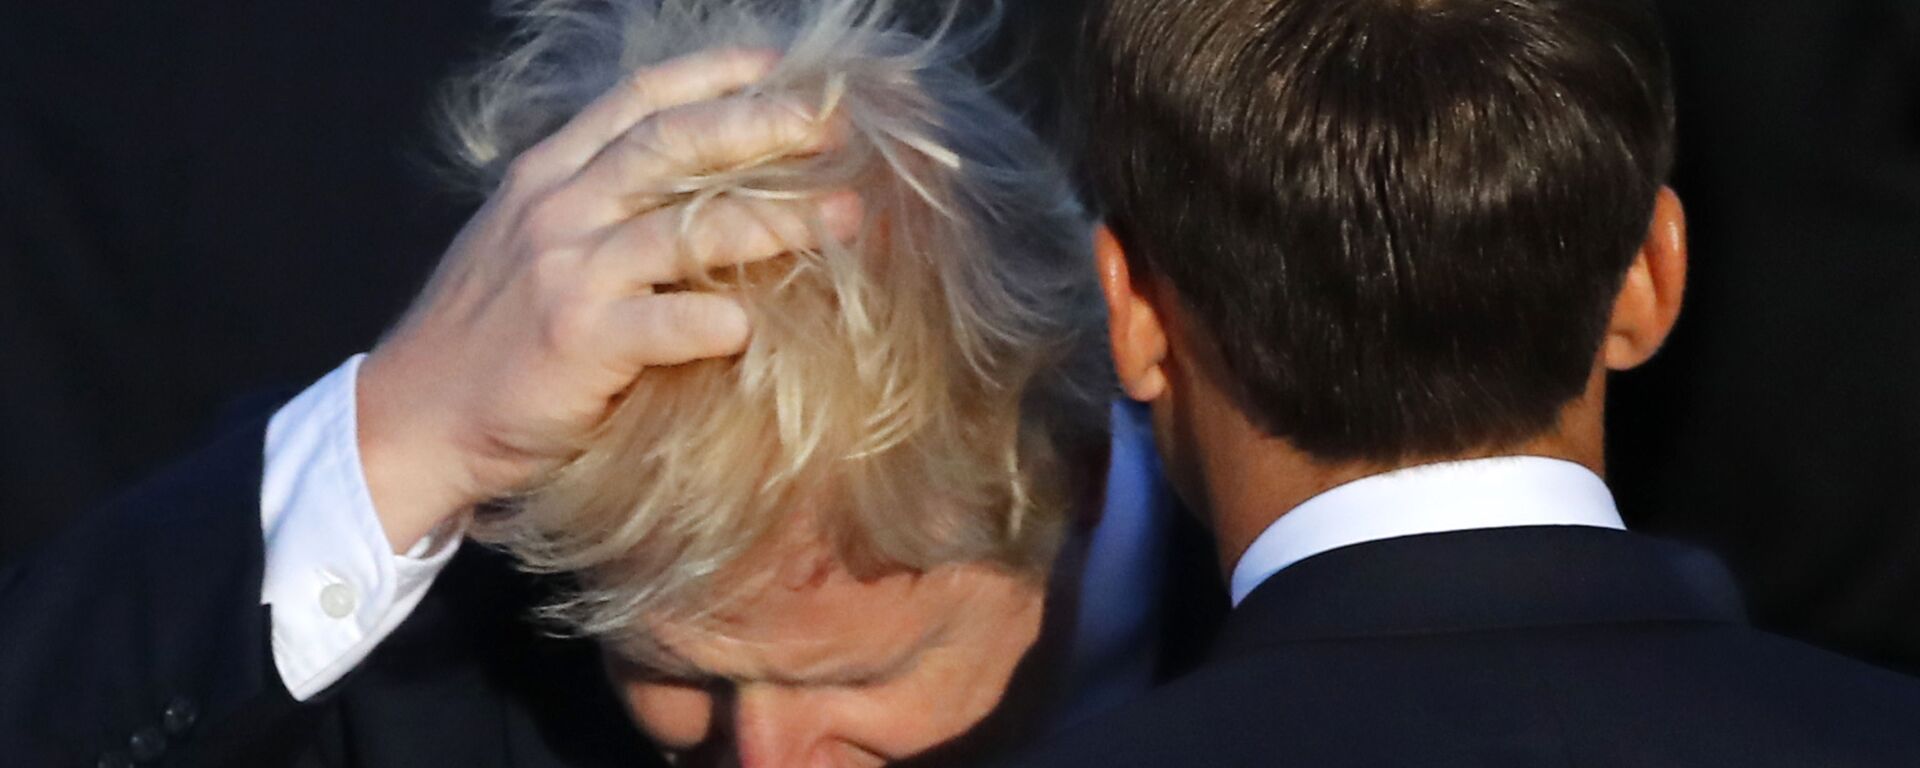 Britain's Prime Minister Boris Johnson touches his hair beside French President Emmanuel Macron during the G7 family photo Sunday, Aug. 25, 2019 in Biarritz - Sputnik International, 1920, 20.09.2021